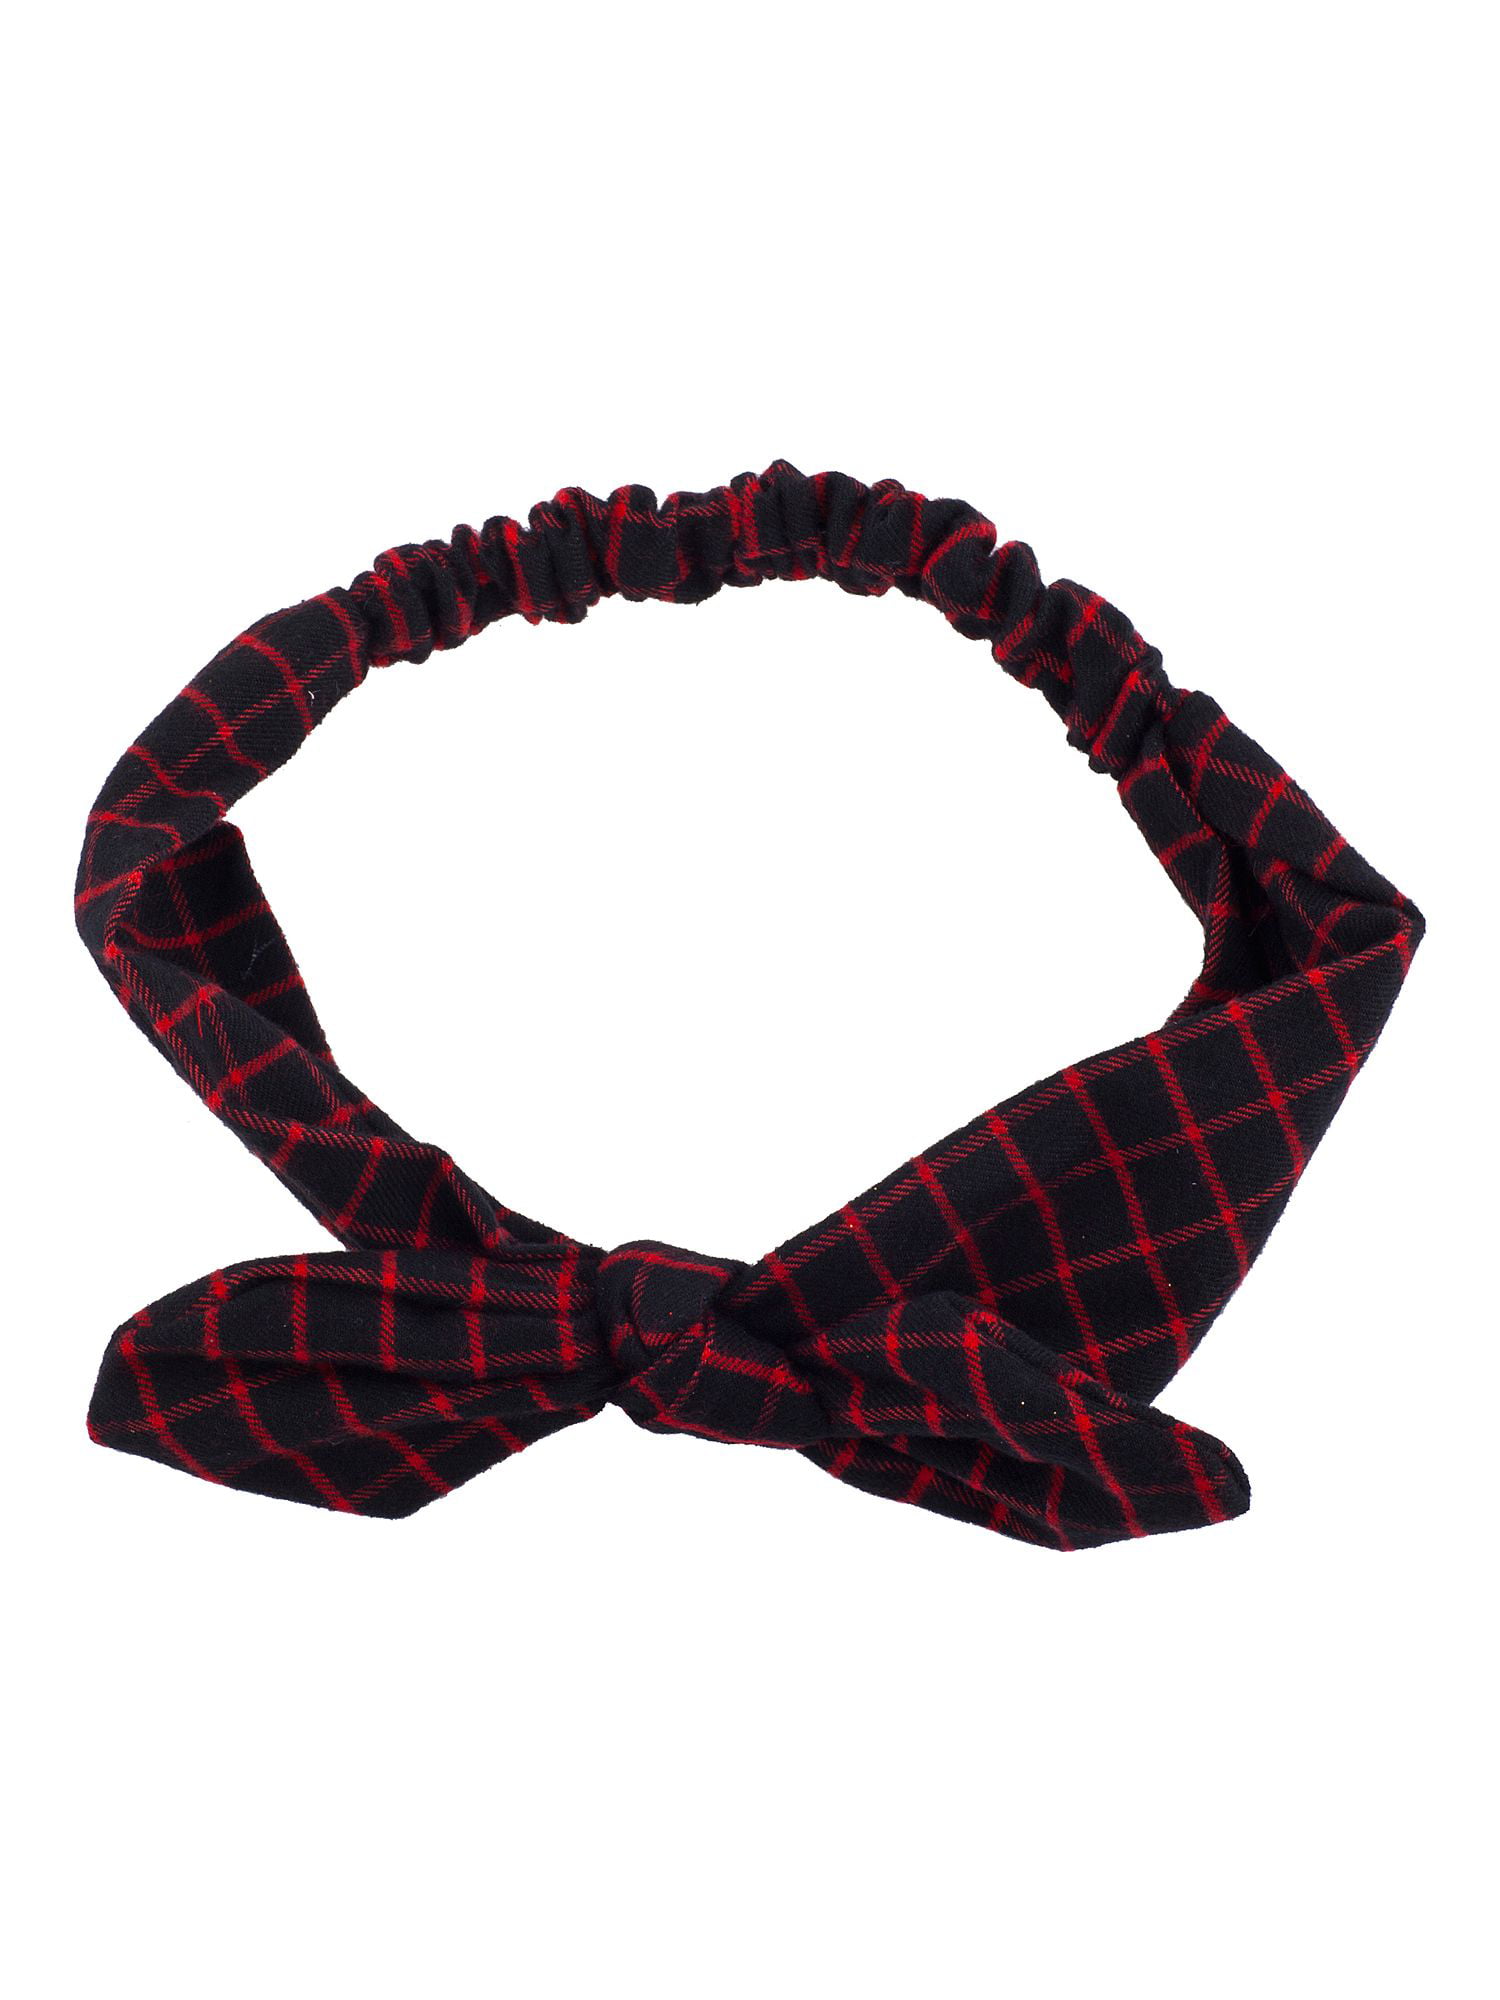 Red & Black Print Red and Black Wavy Patterned Headband Twist Knot Headband